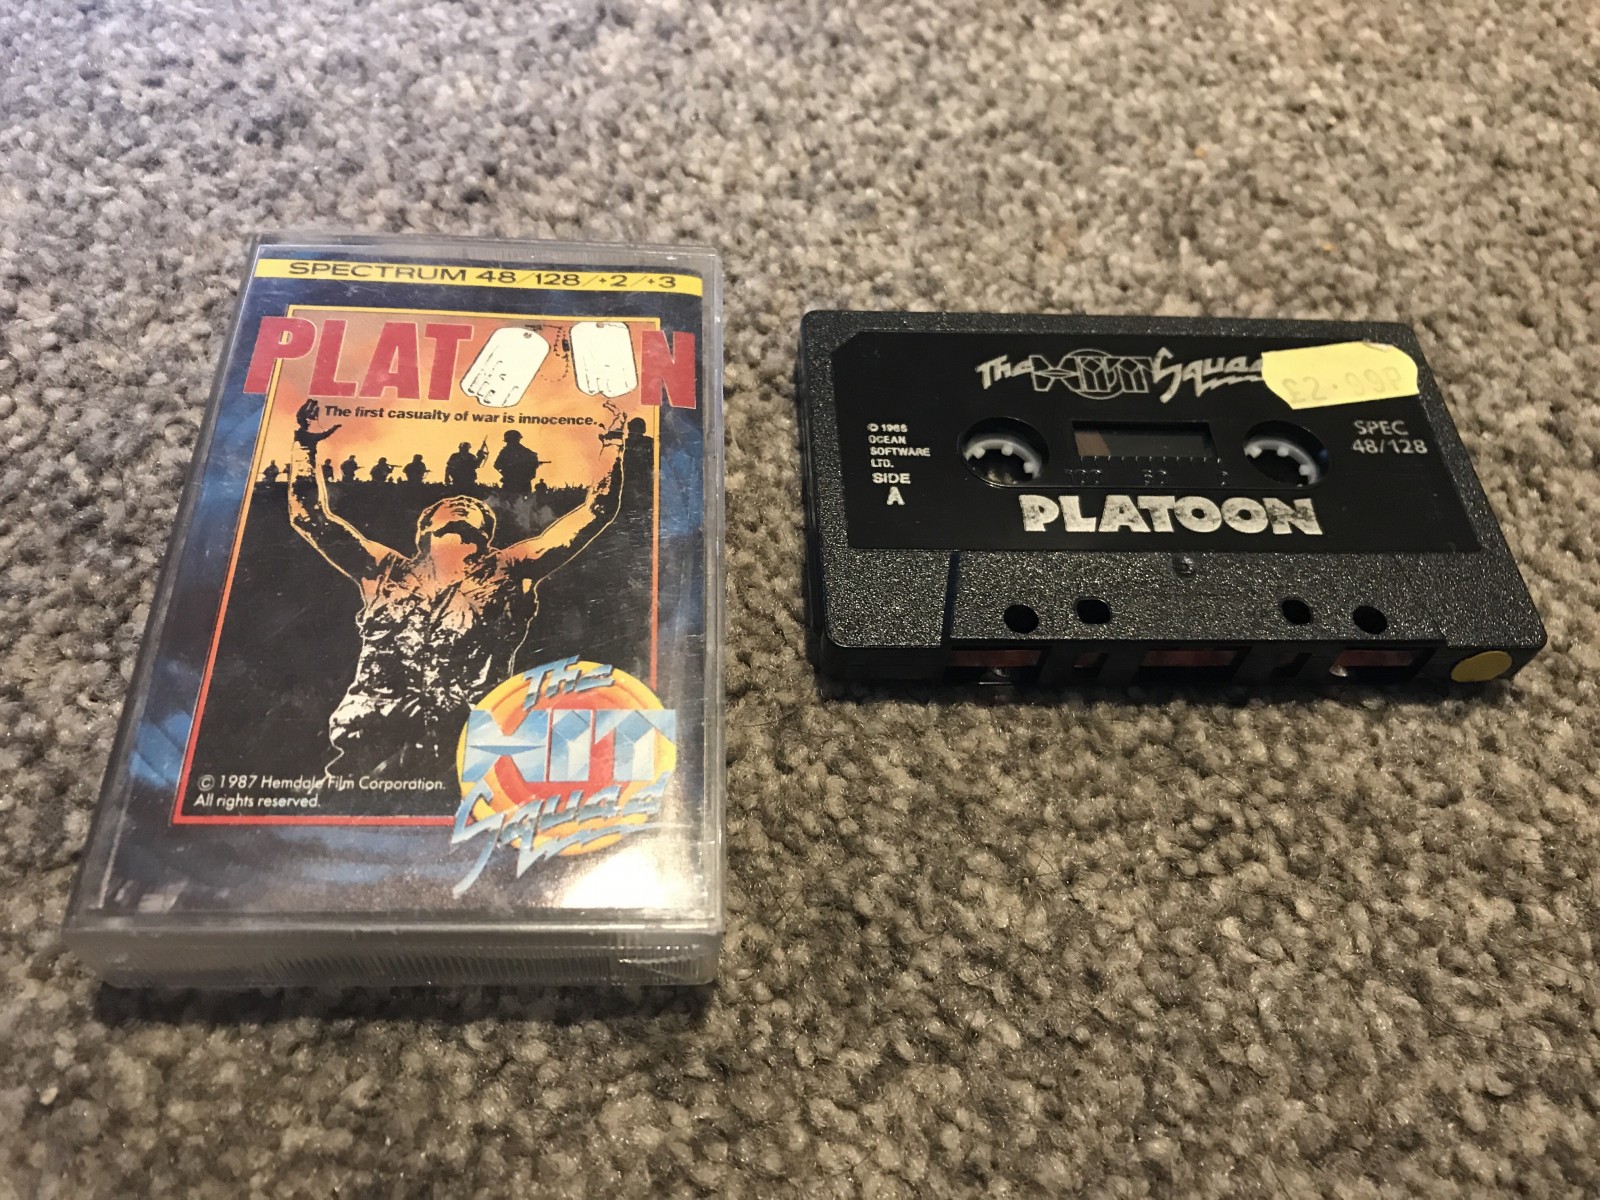 ZX81 / ZX Spectrum: ZX Spectrum 48k game Platoon - The Hit Squad